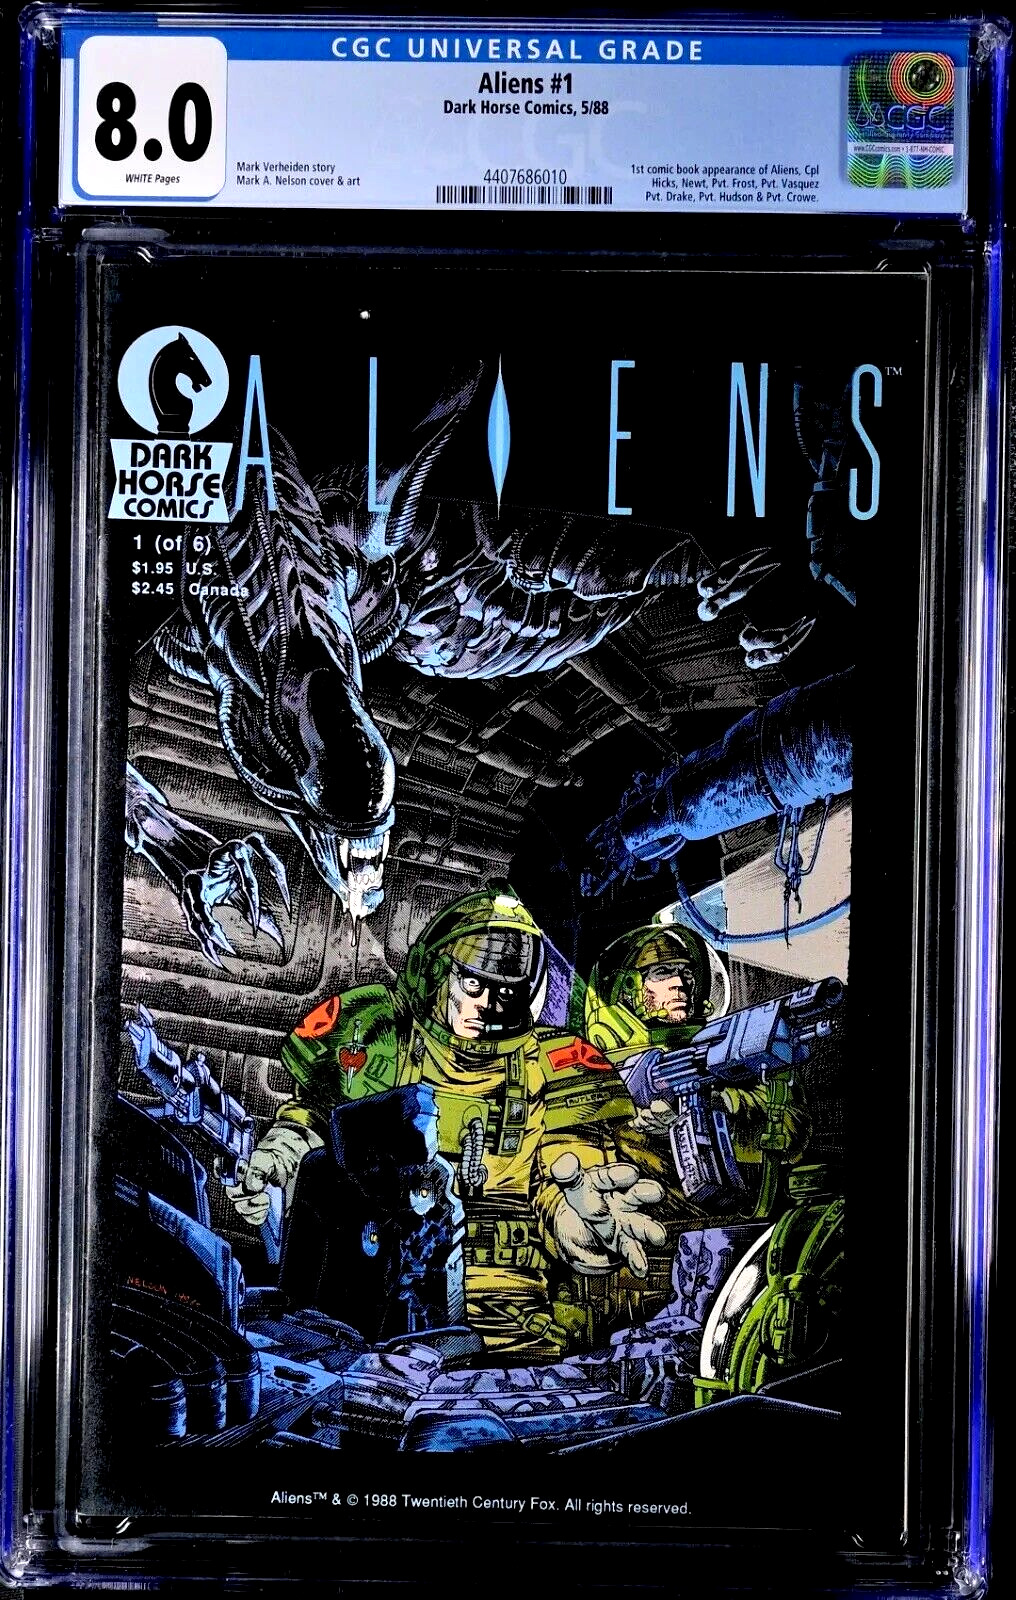 🔥ALIENS #1~CGC 8.0 White Pgs~Dark Horse Comics, 5/88~1st appearance of Aliens